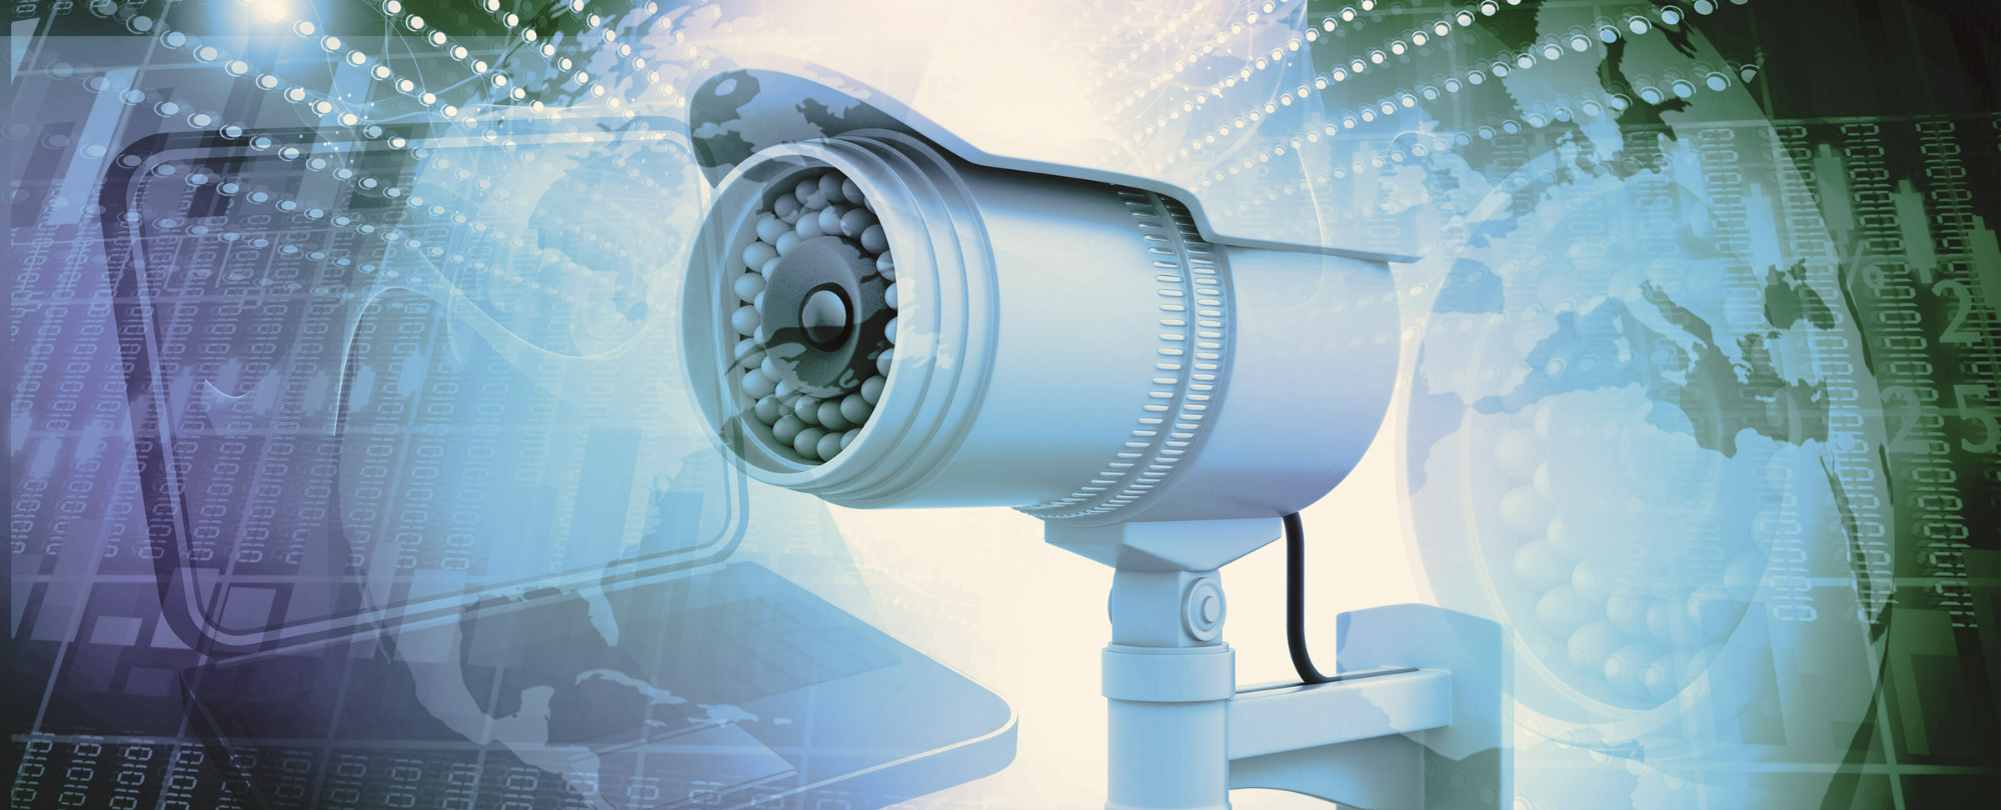 Stok K9- CCTV Surveillance Systems